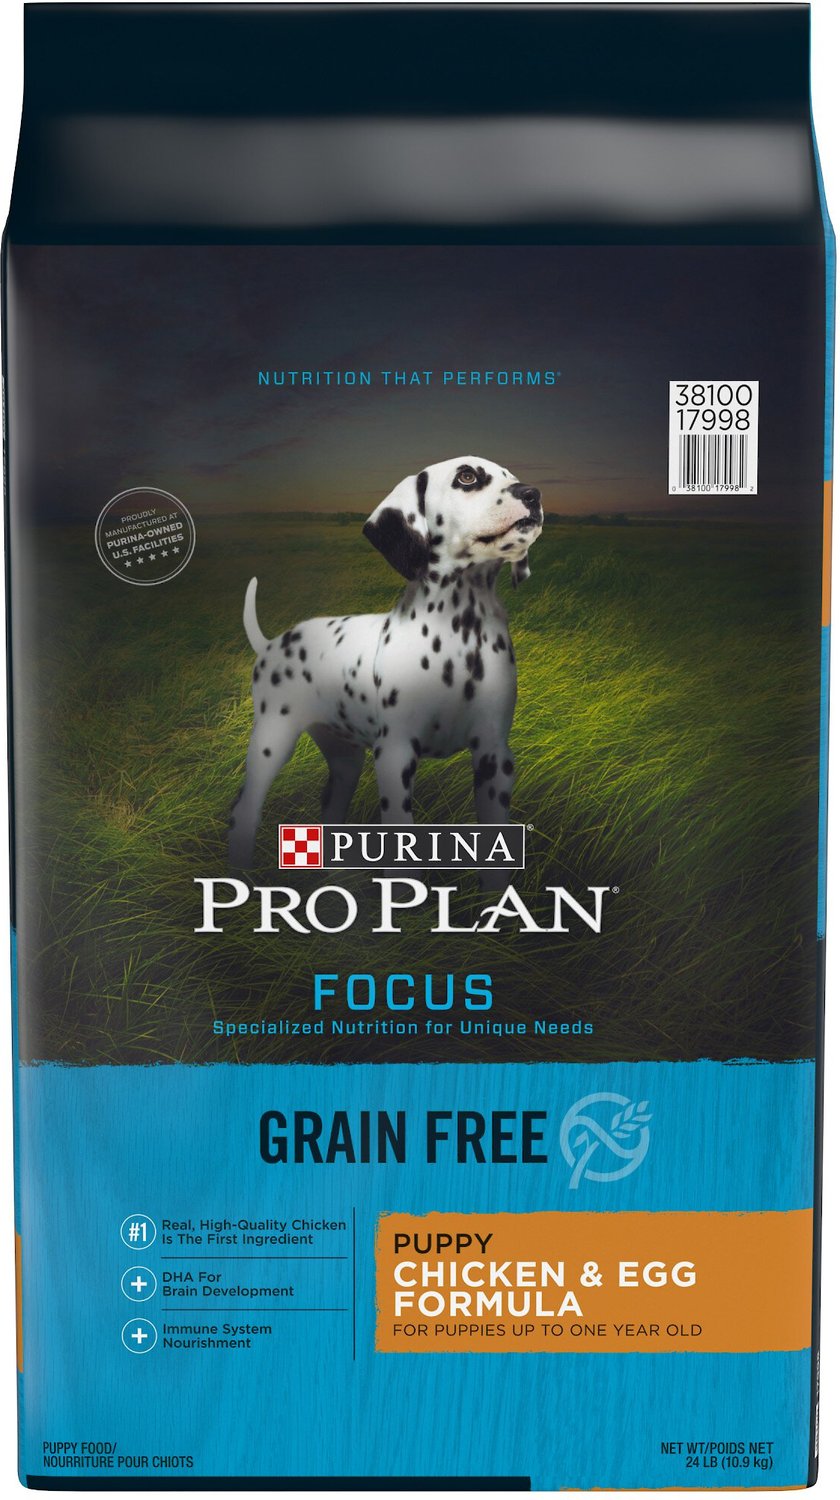 Purina Pro Plan Puppy Large Breed Feeding Chart